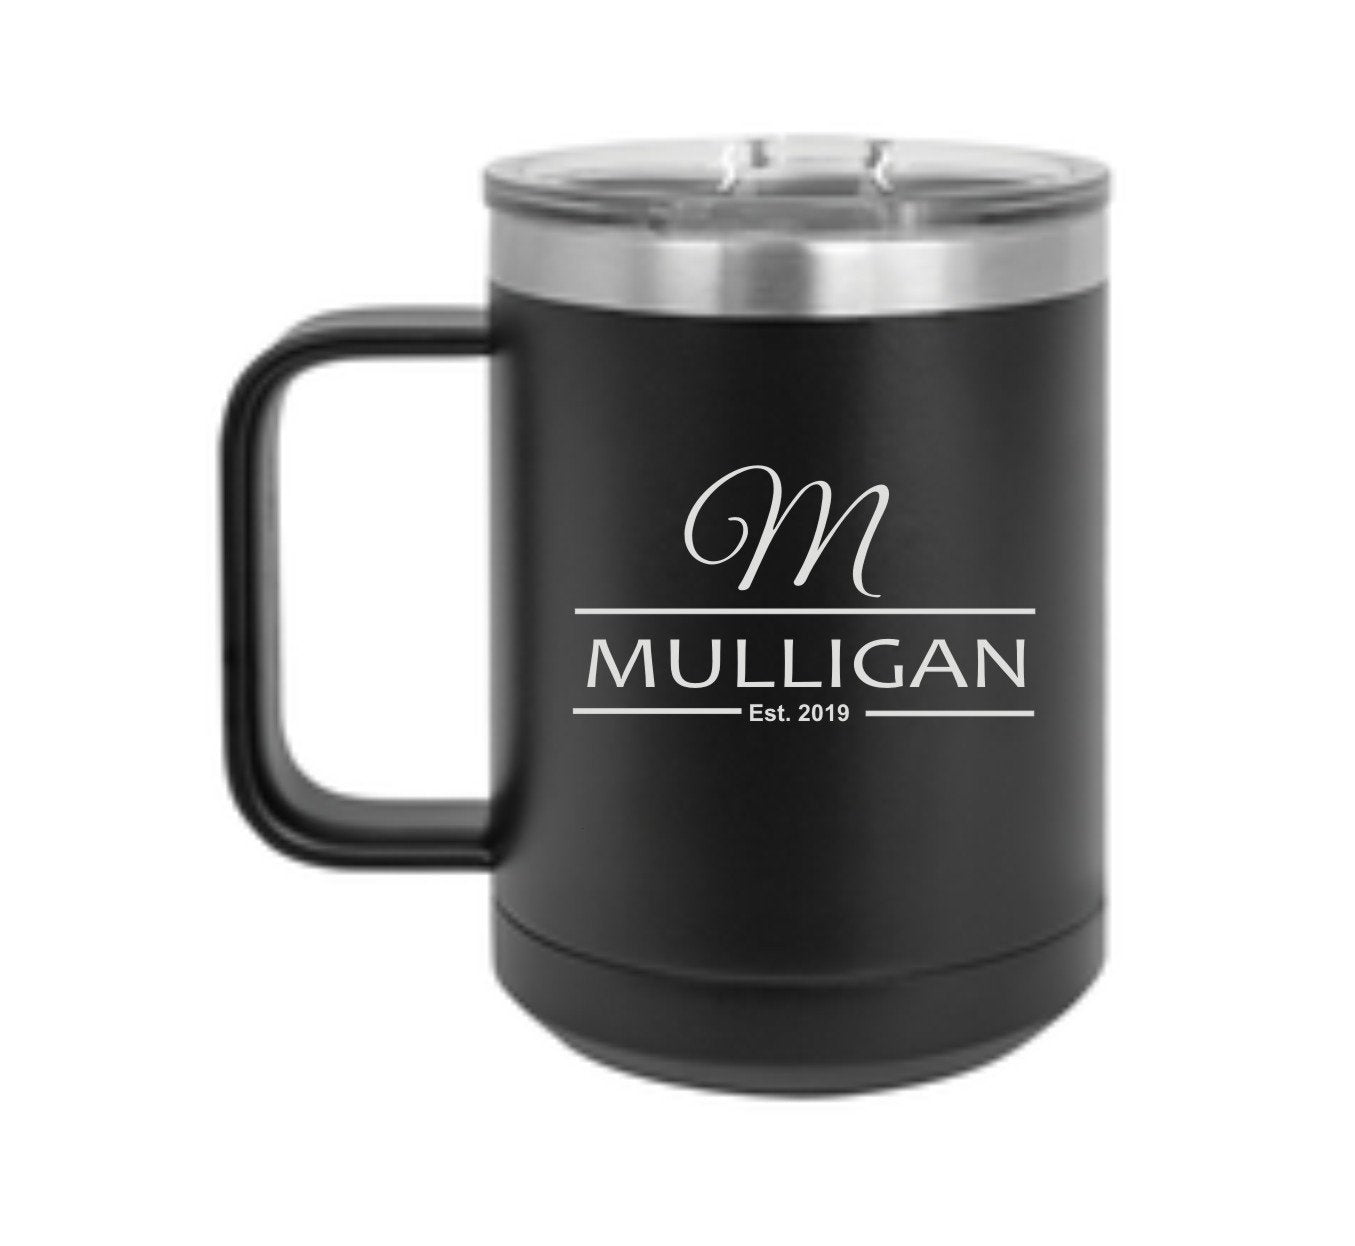 Custom Personalized Insulated Coffee Mug Gift, Personalized Coffee Mug, Insulated Travel Coffee Mug Gift, Travel Mug, Personalized Mug